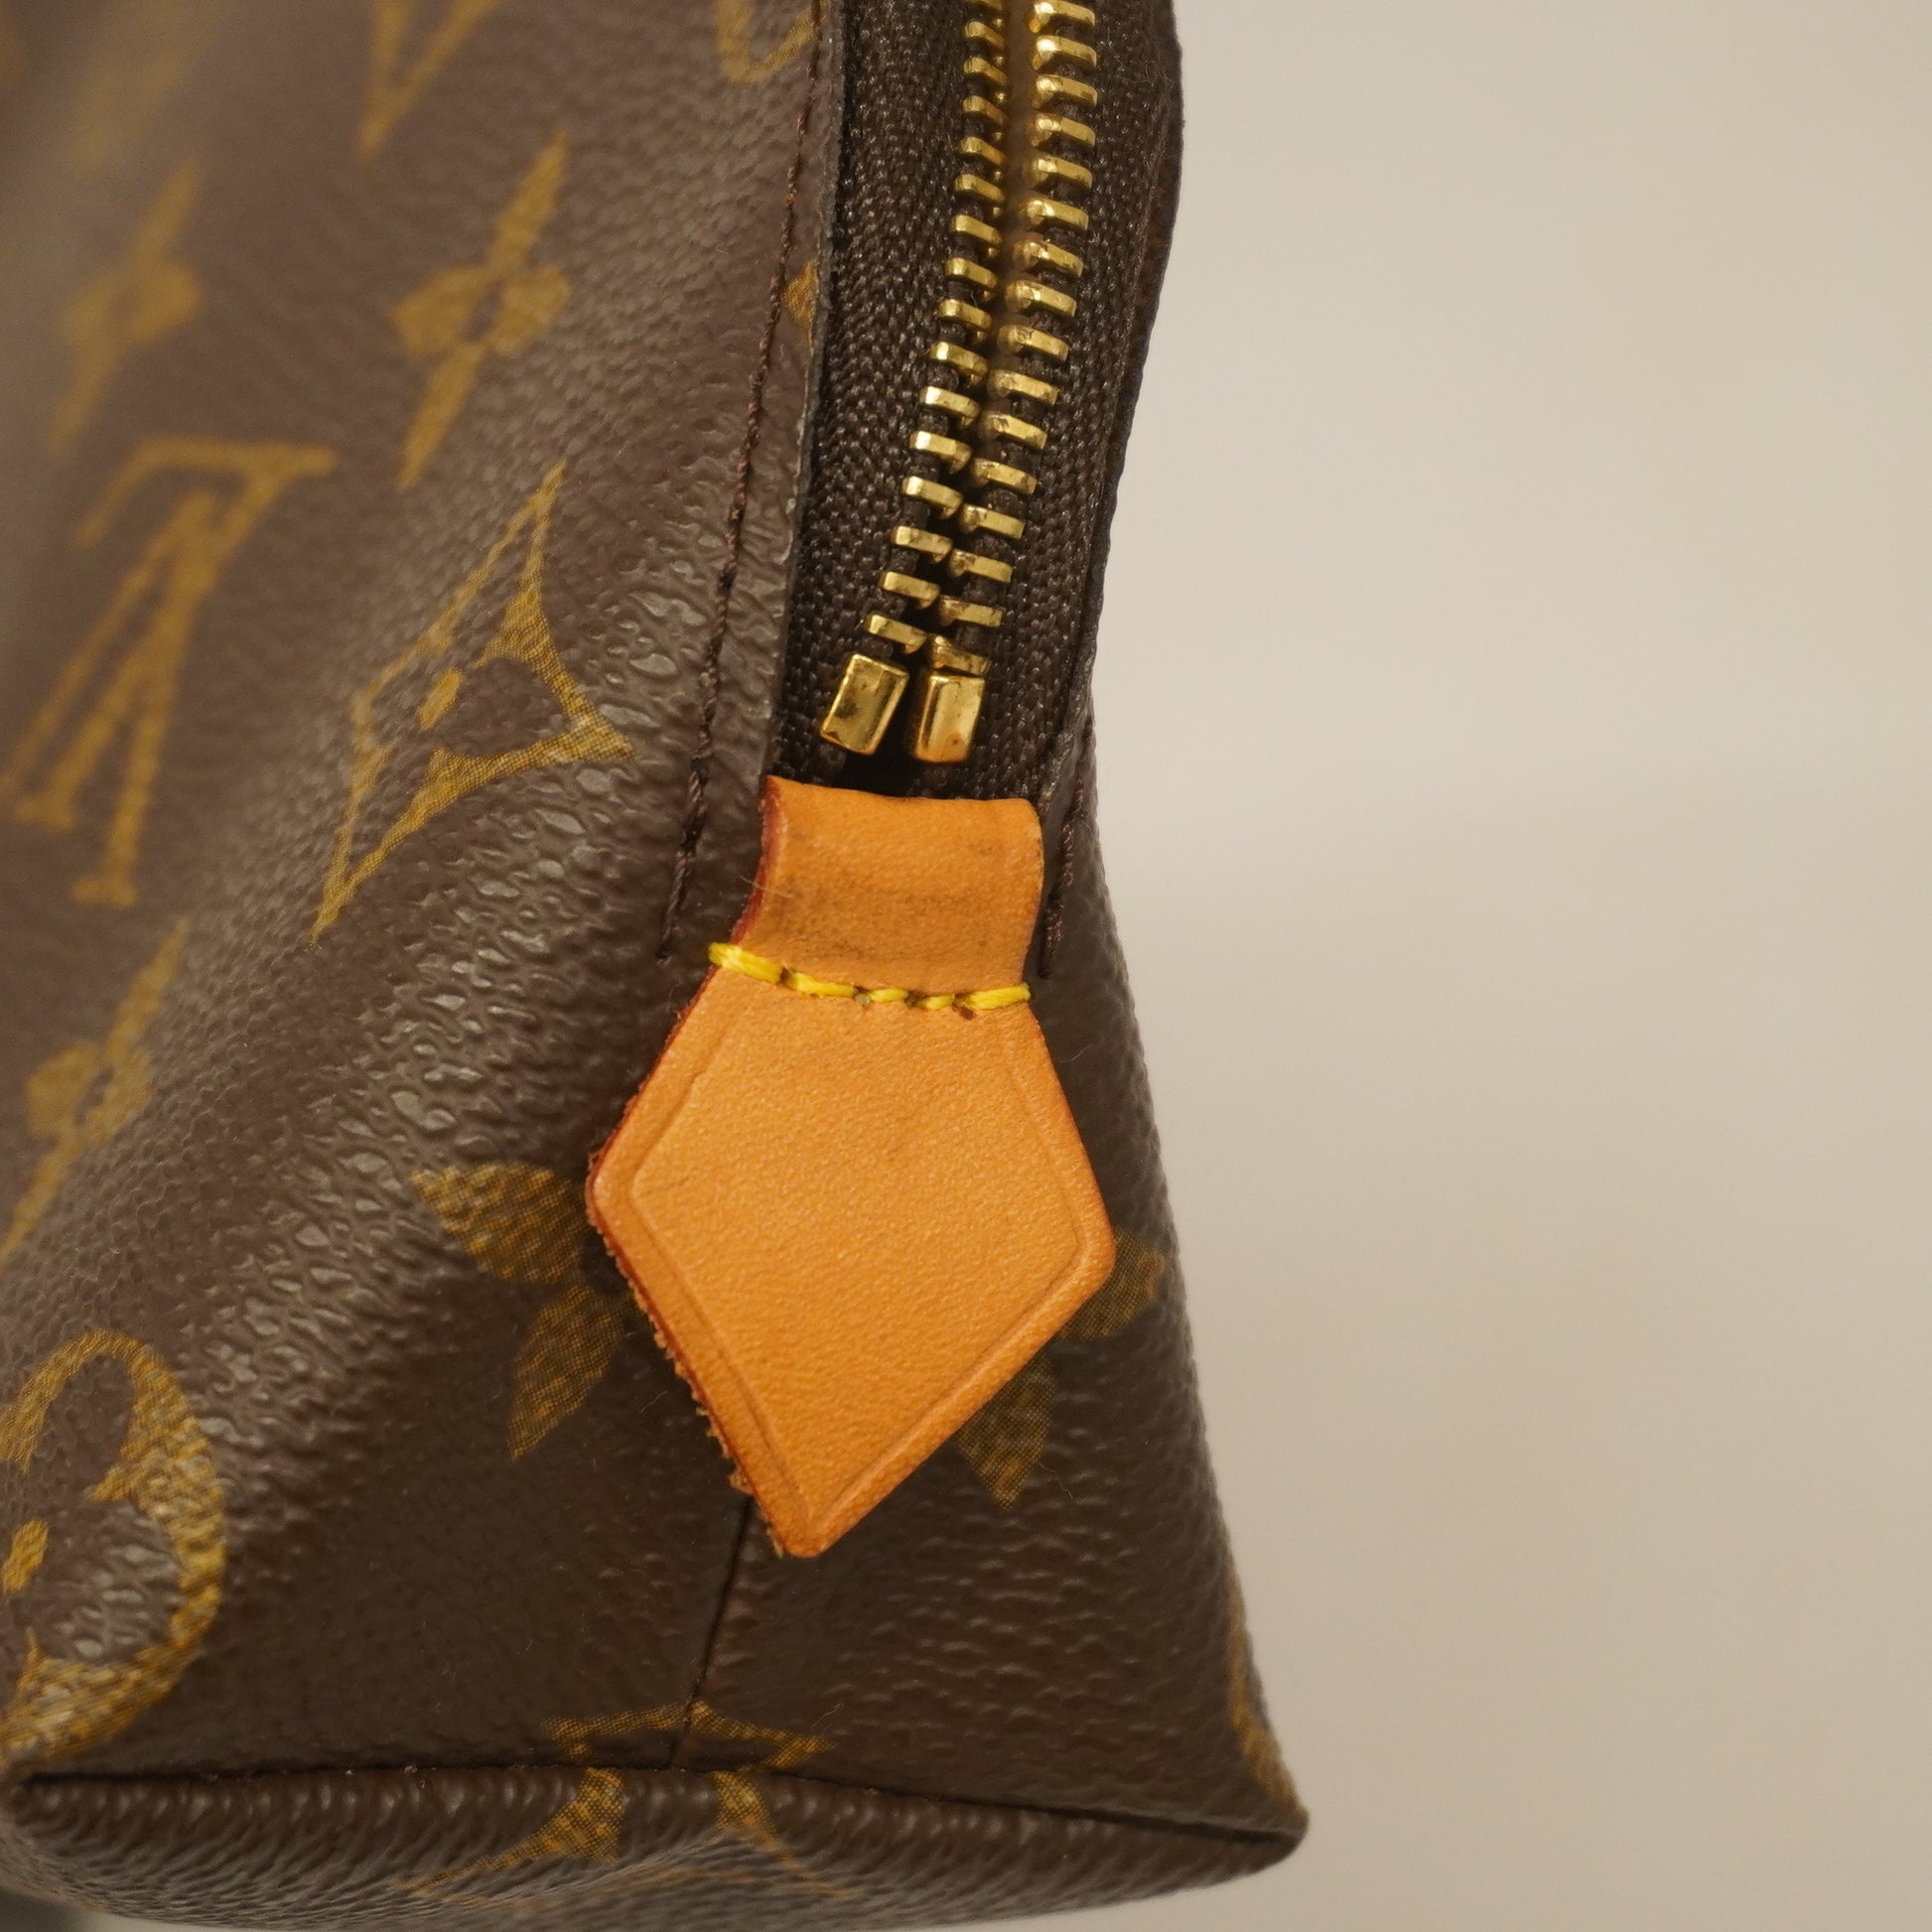 Shop Louis Vuitton MONOGRAM Cosmetic pouch (M47515) by momochani